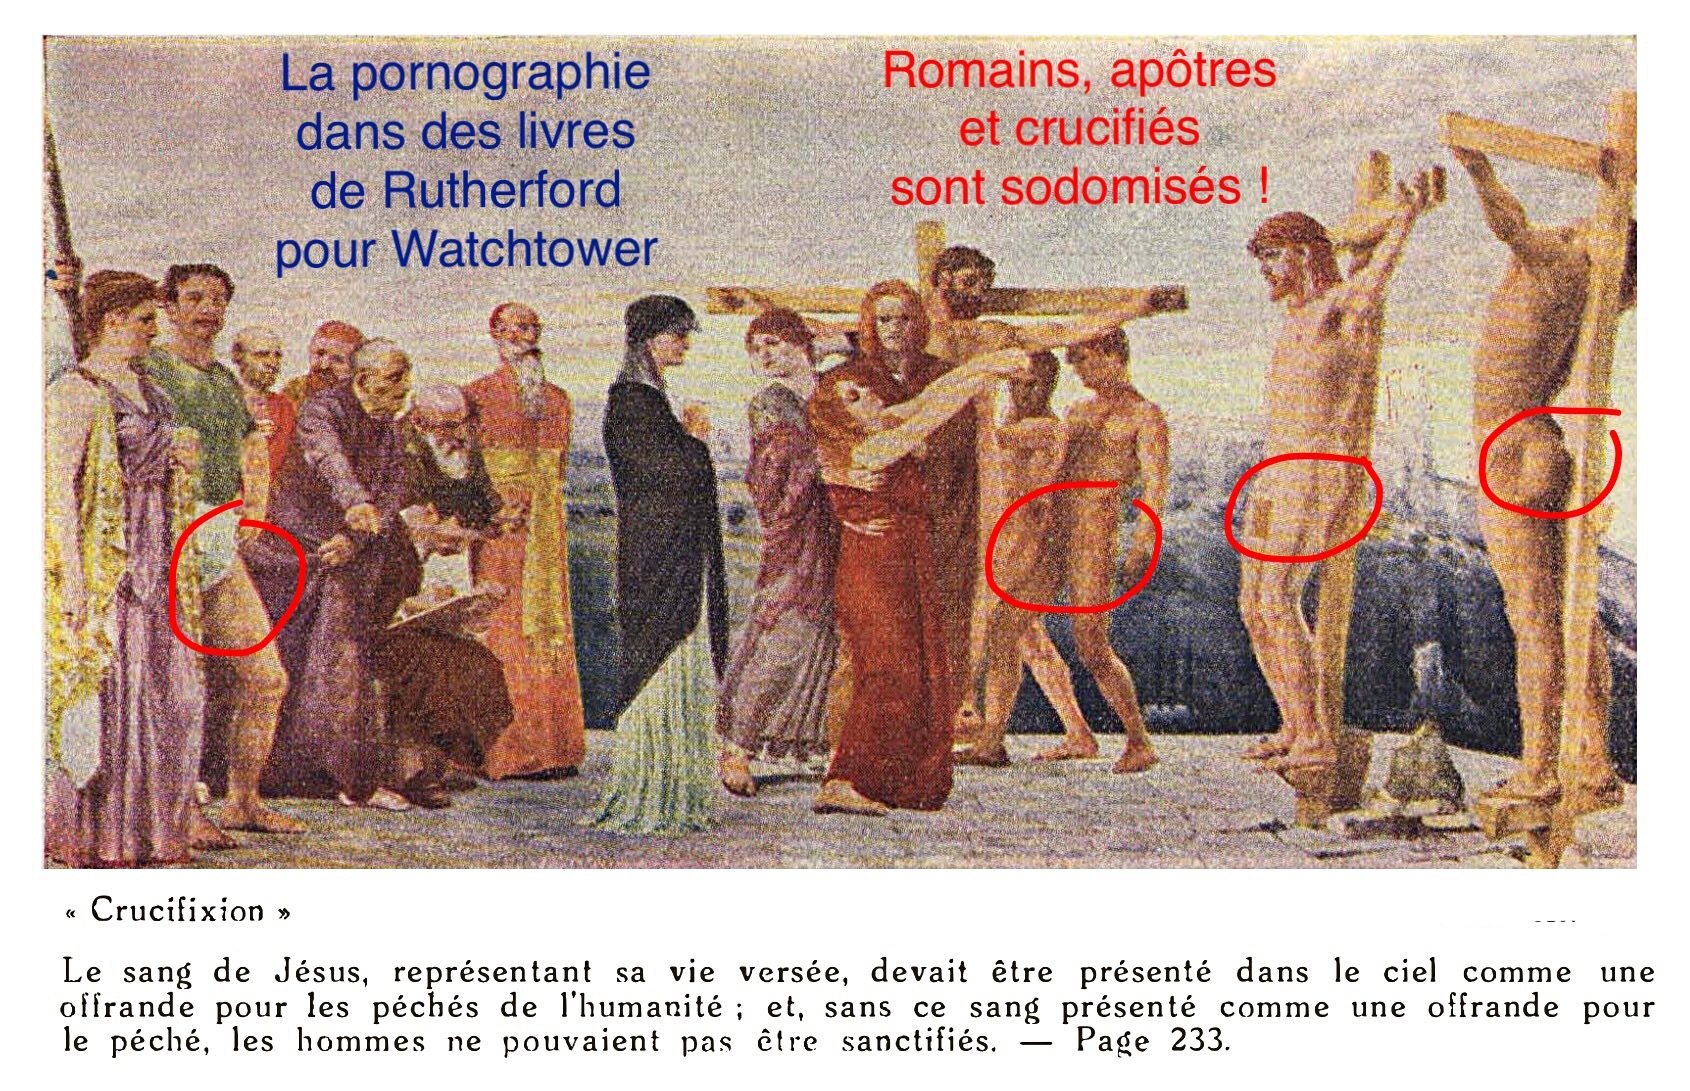 La villa Beth Sarim et son "poteau de supplice" du satyre Marsya où Rutherford y faisaient ses orgies sexuelles. 7qc8